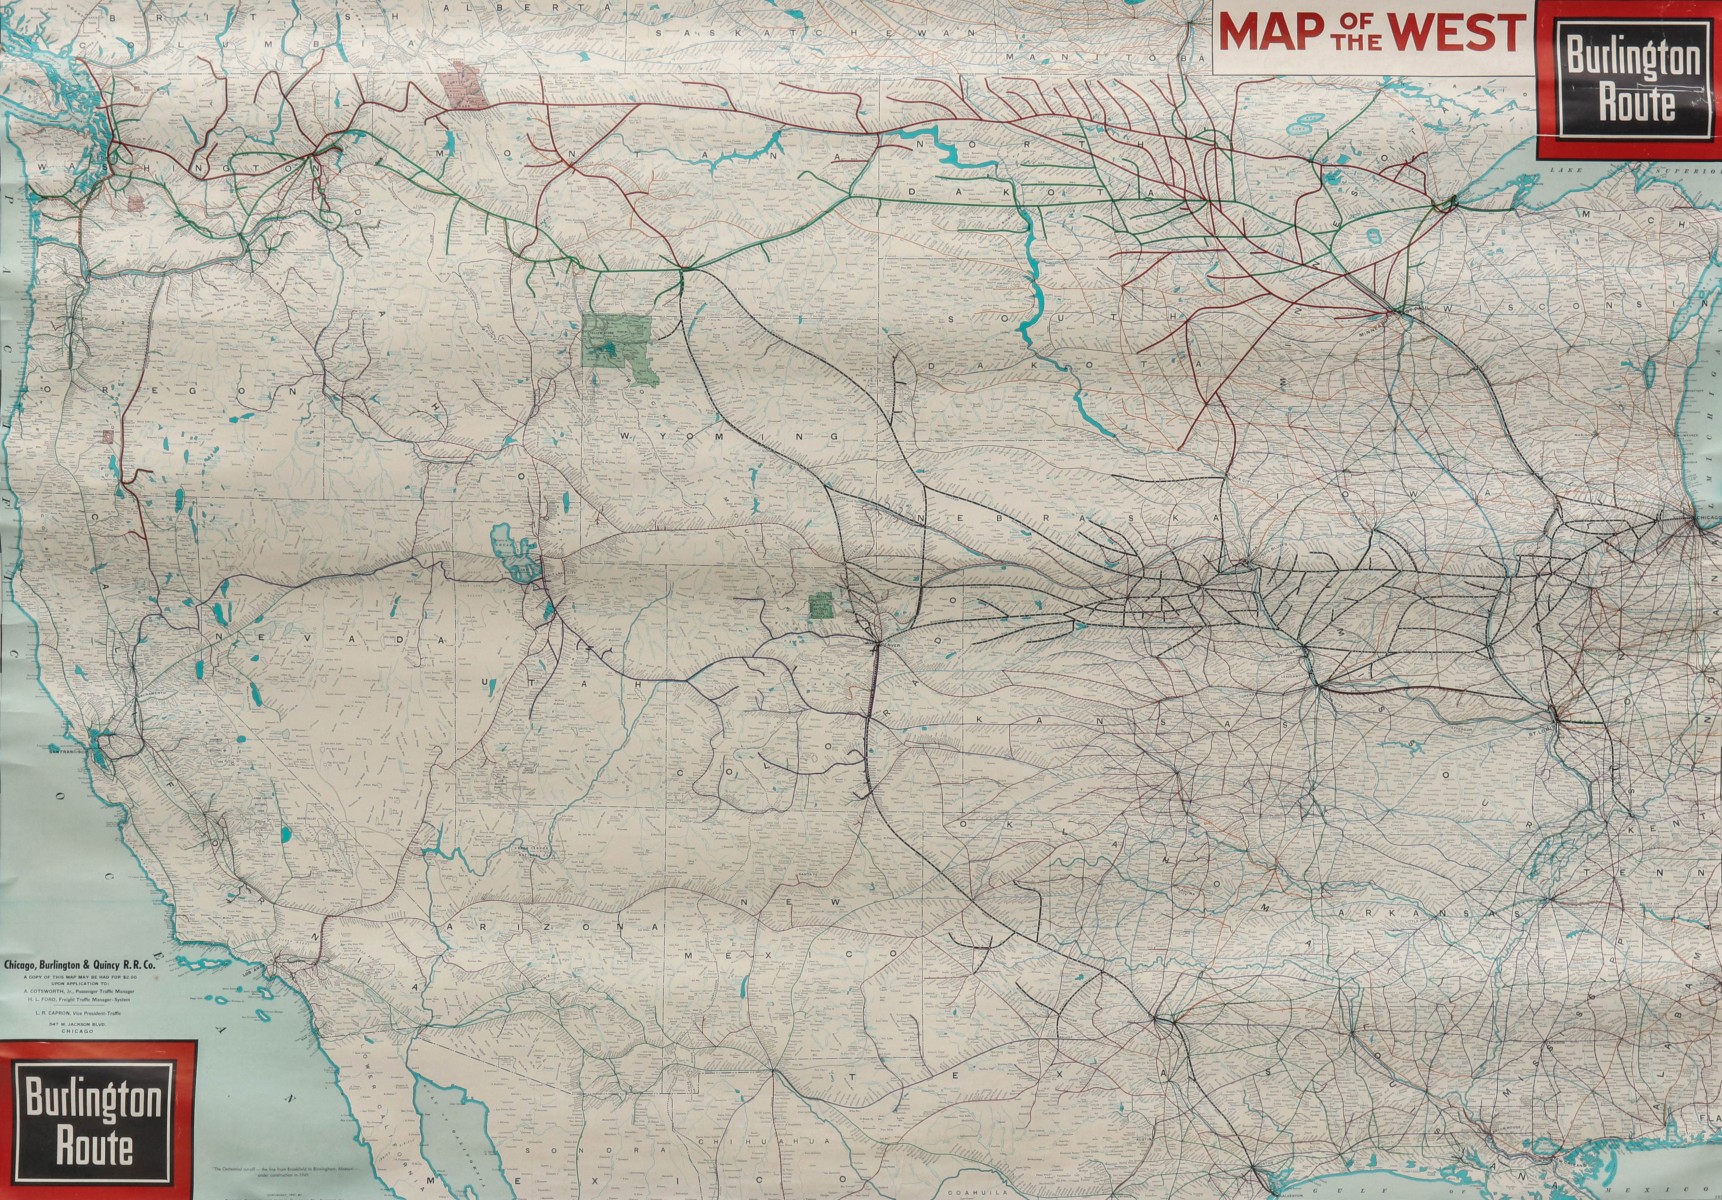 BURLINGTON ROUTE RAILROAD 'MAP OF THE WEST' DATED 1947